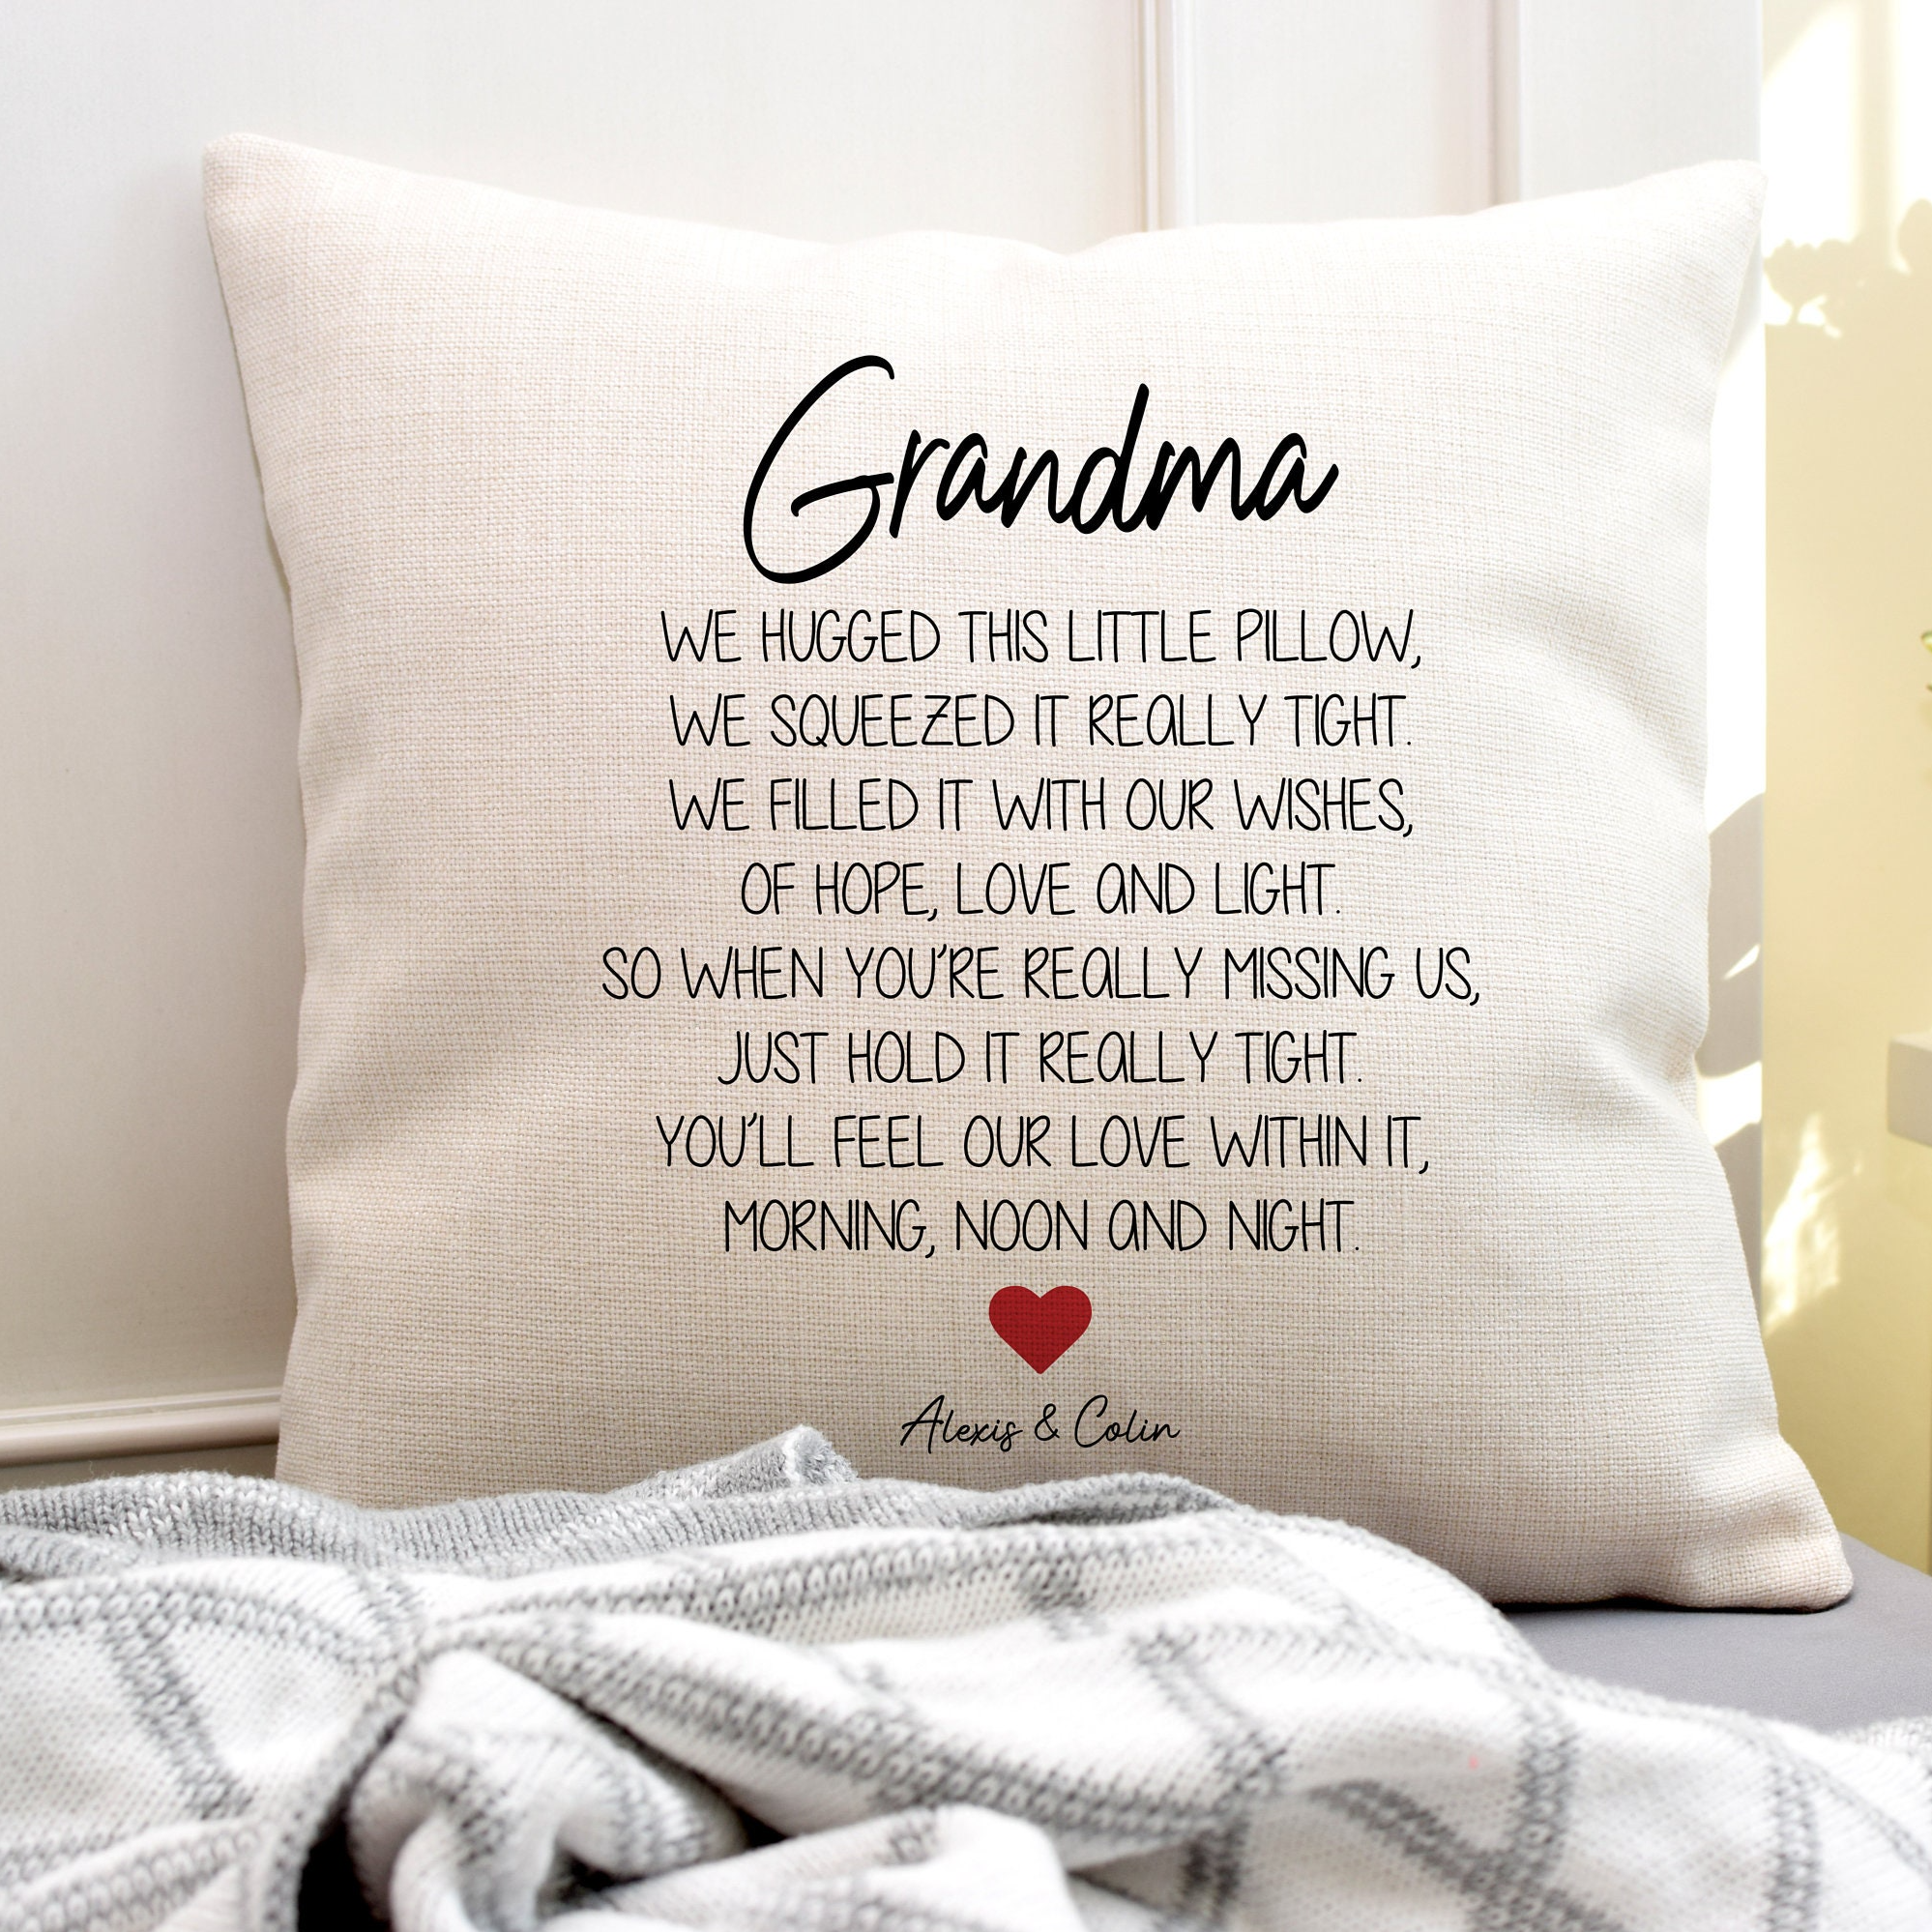 Just Hold It Really Tight - Personalized Custom Grandma Nana Pillowcase